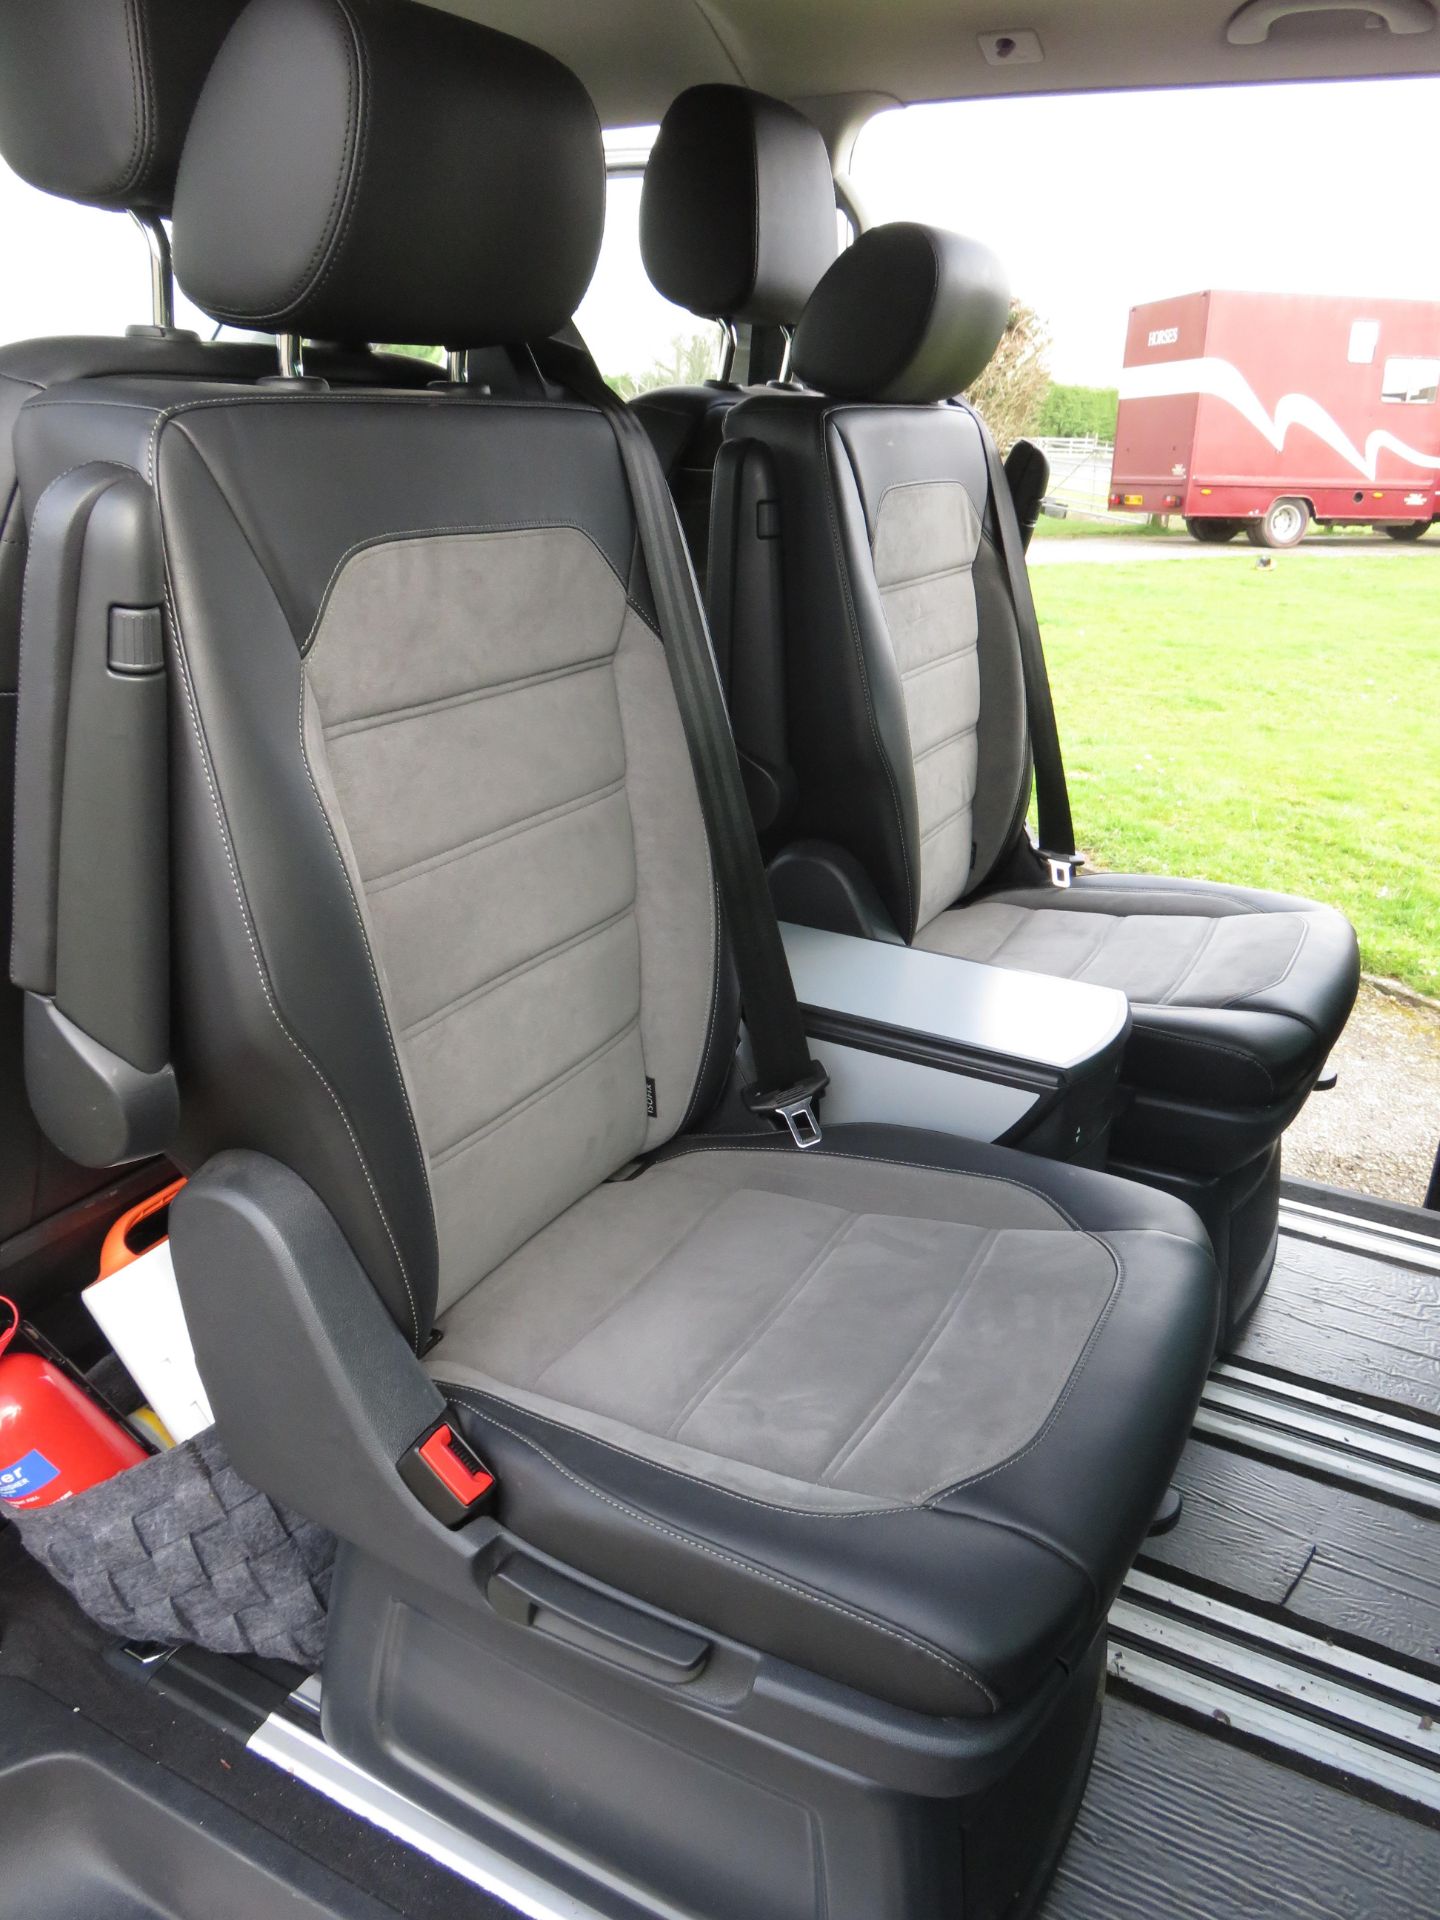 1 Volkswagen Caravelle 2.0 TDI (150PS) Executive BMT SNB DSG 7 Seat Five Door MPV - Image 13 of 17